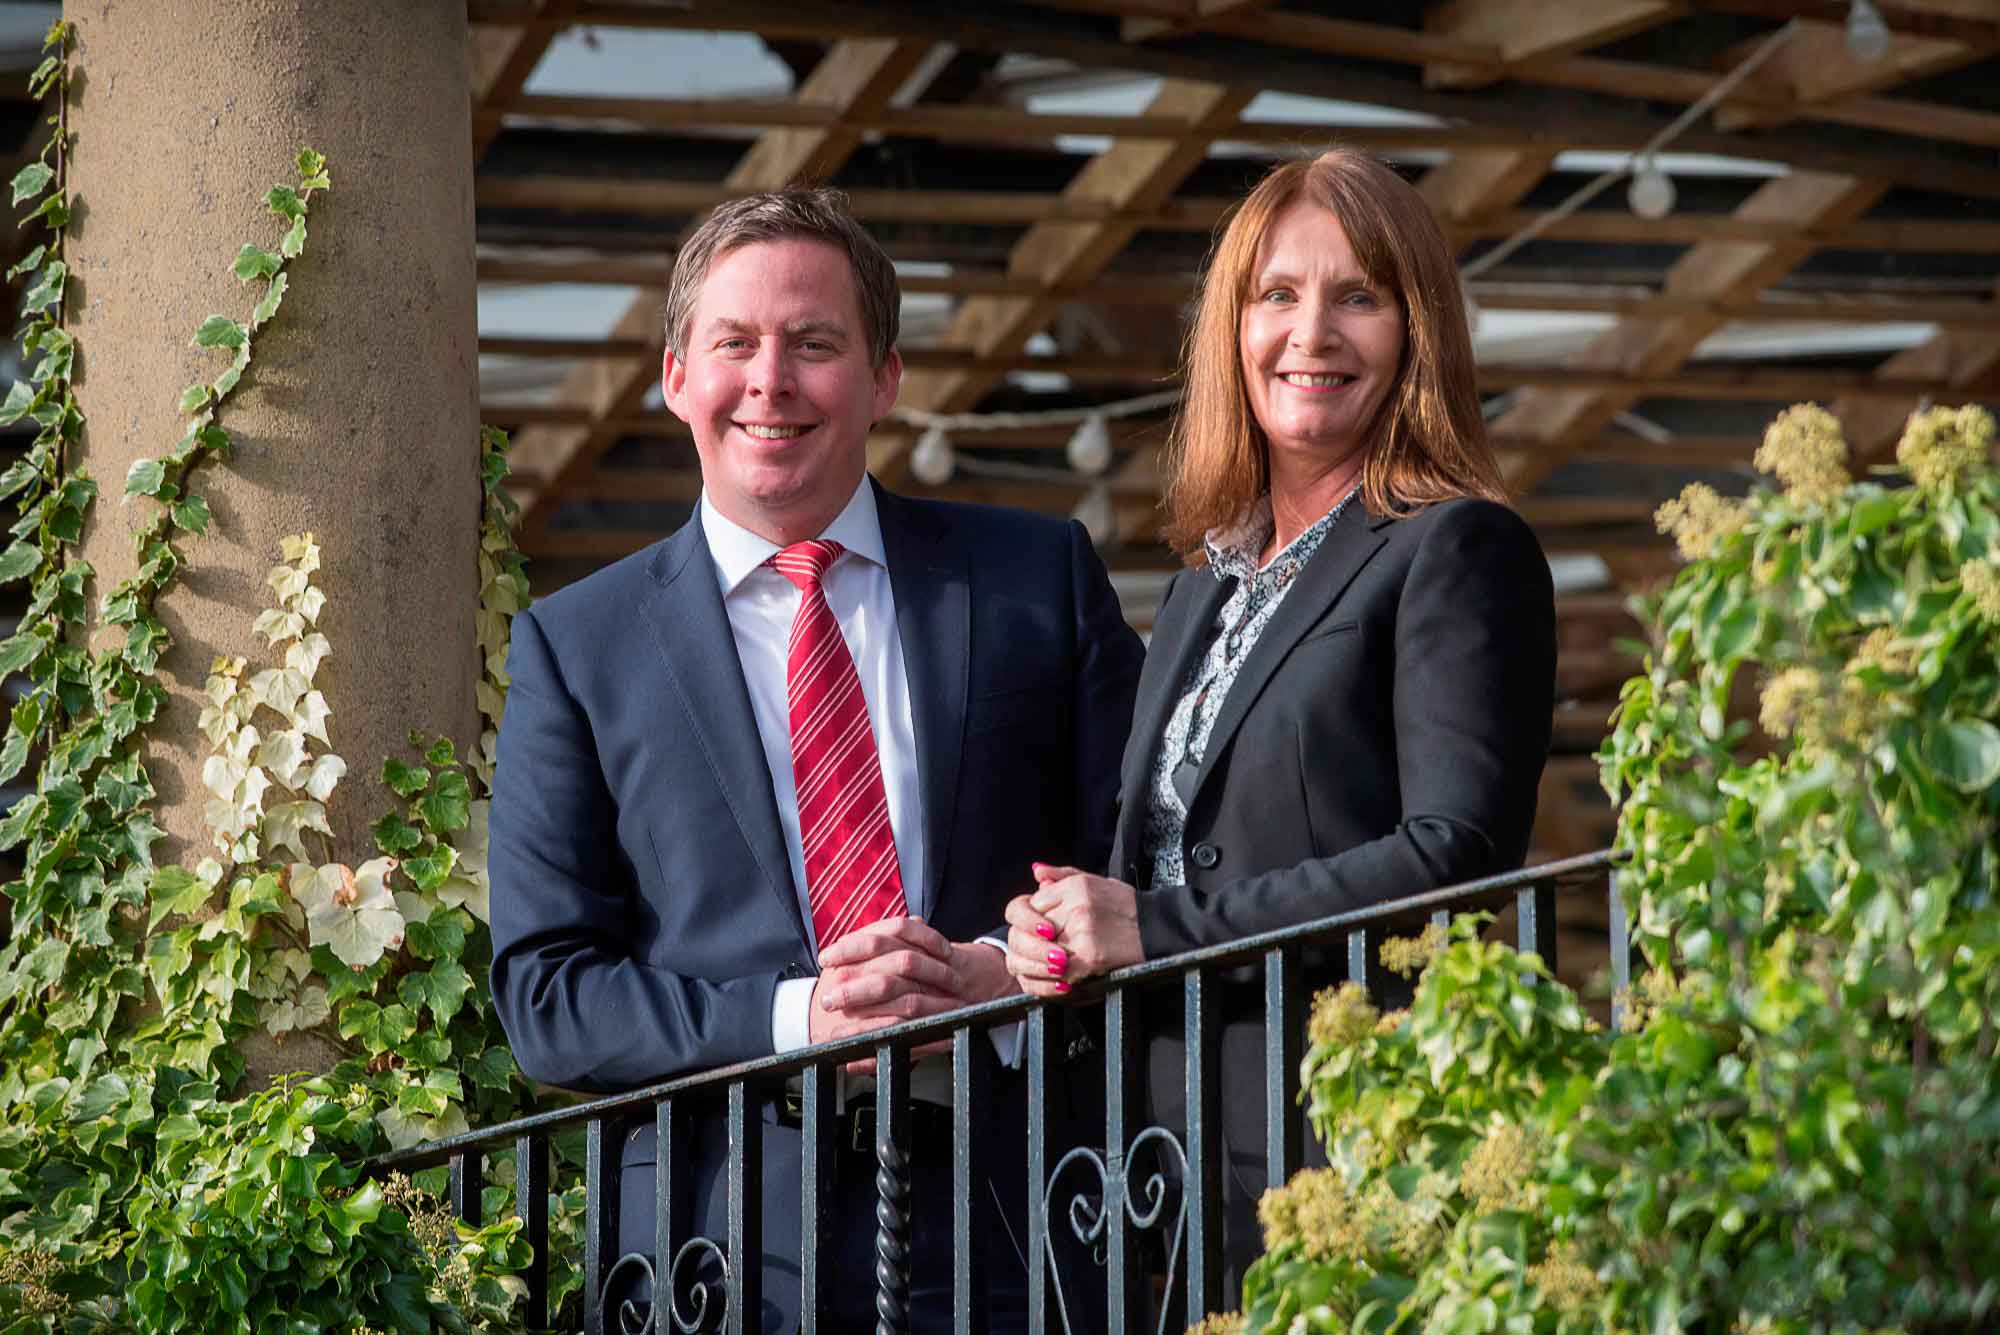 Lee Hurst and Lynne Bowman of Harrogate Wealth Management